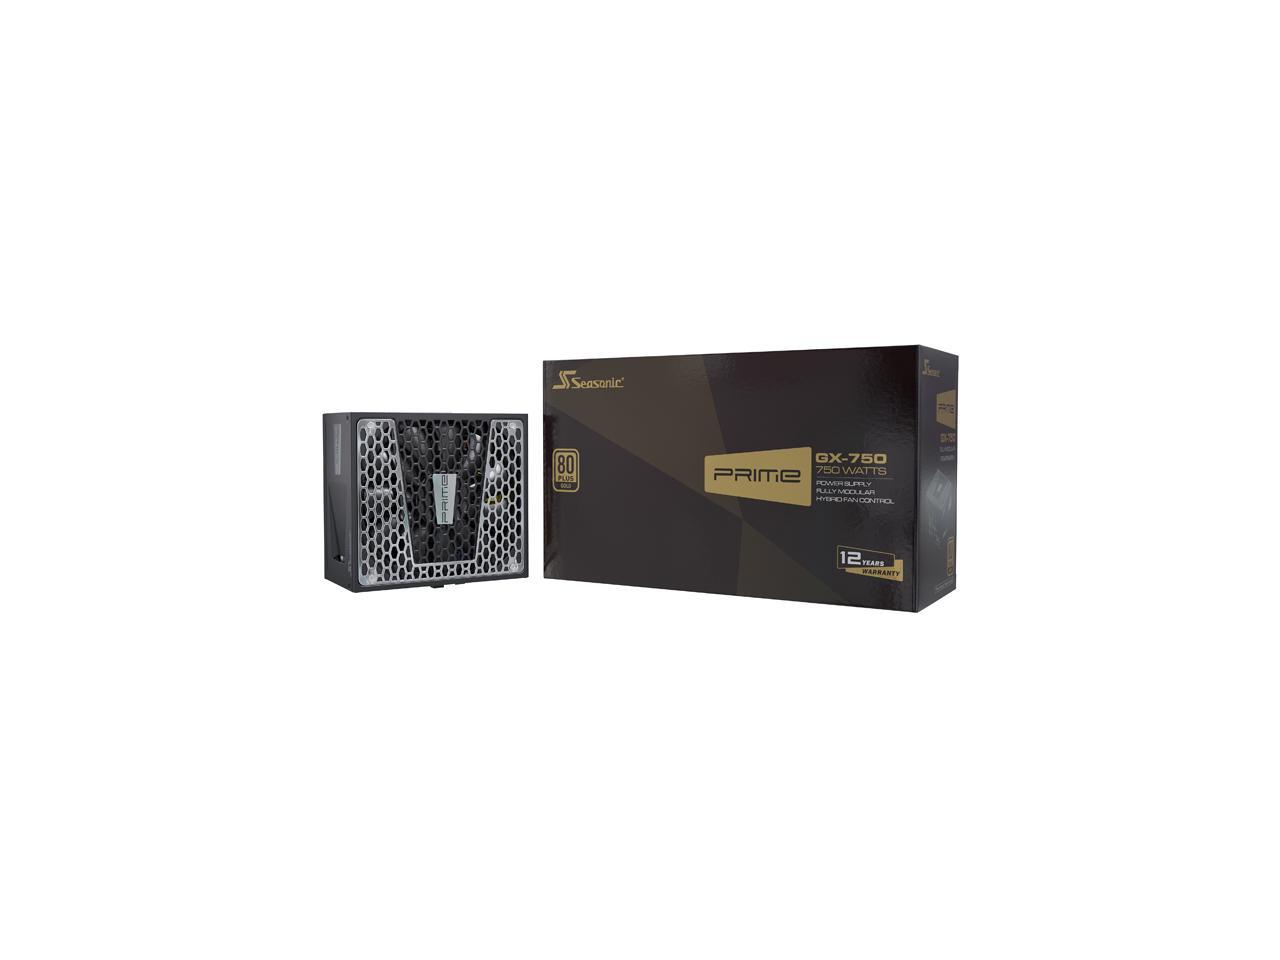 750W Seasonic Prime GX-750 80+ Gold Modular Power Supply @Newegg (AR) $88.25